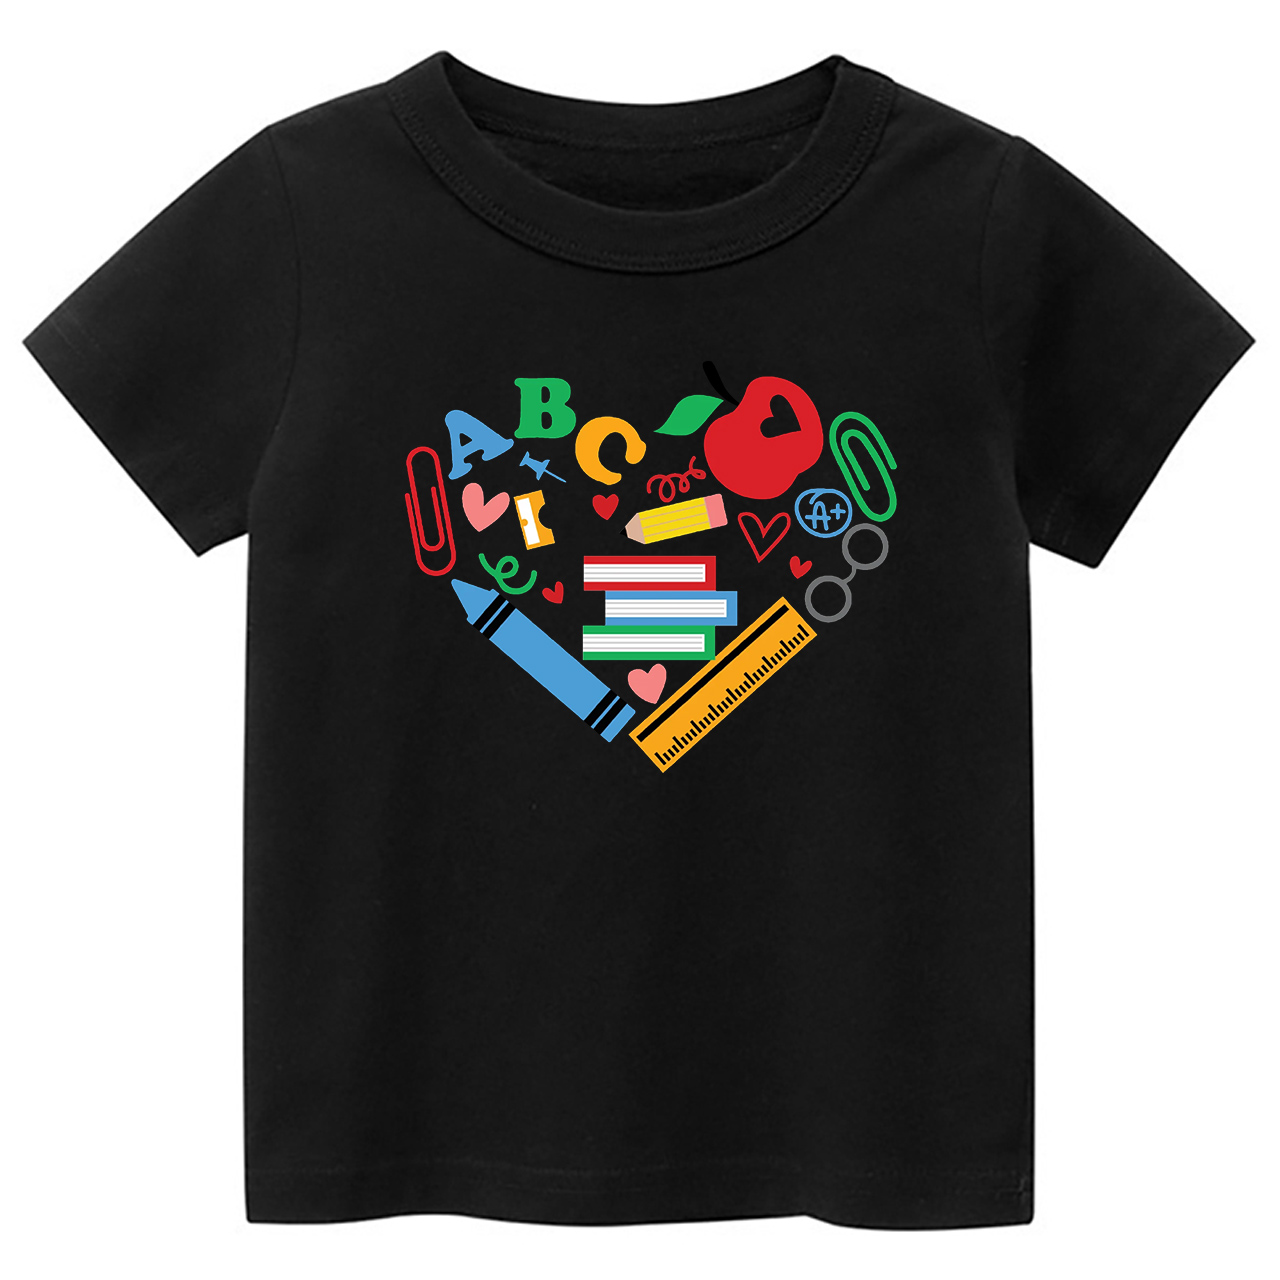 I love school - Children's Heart T-Shirt